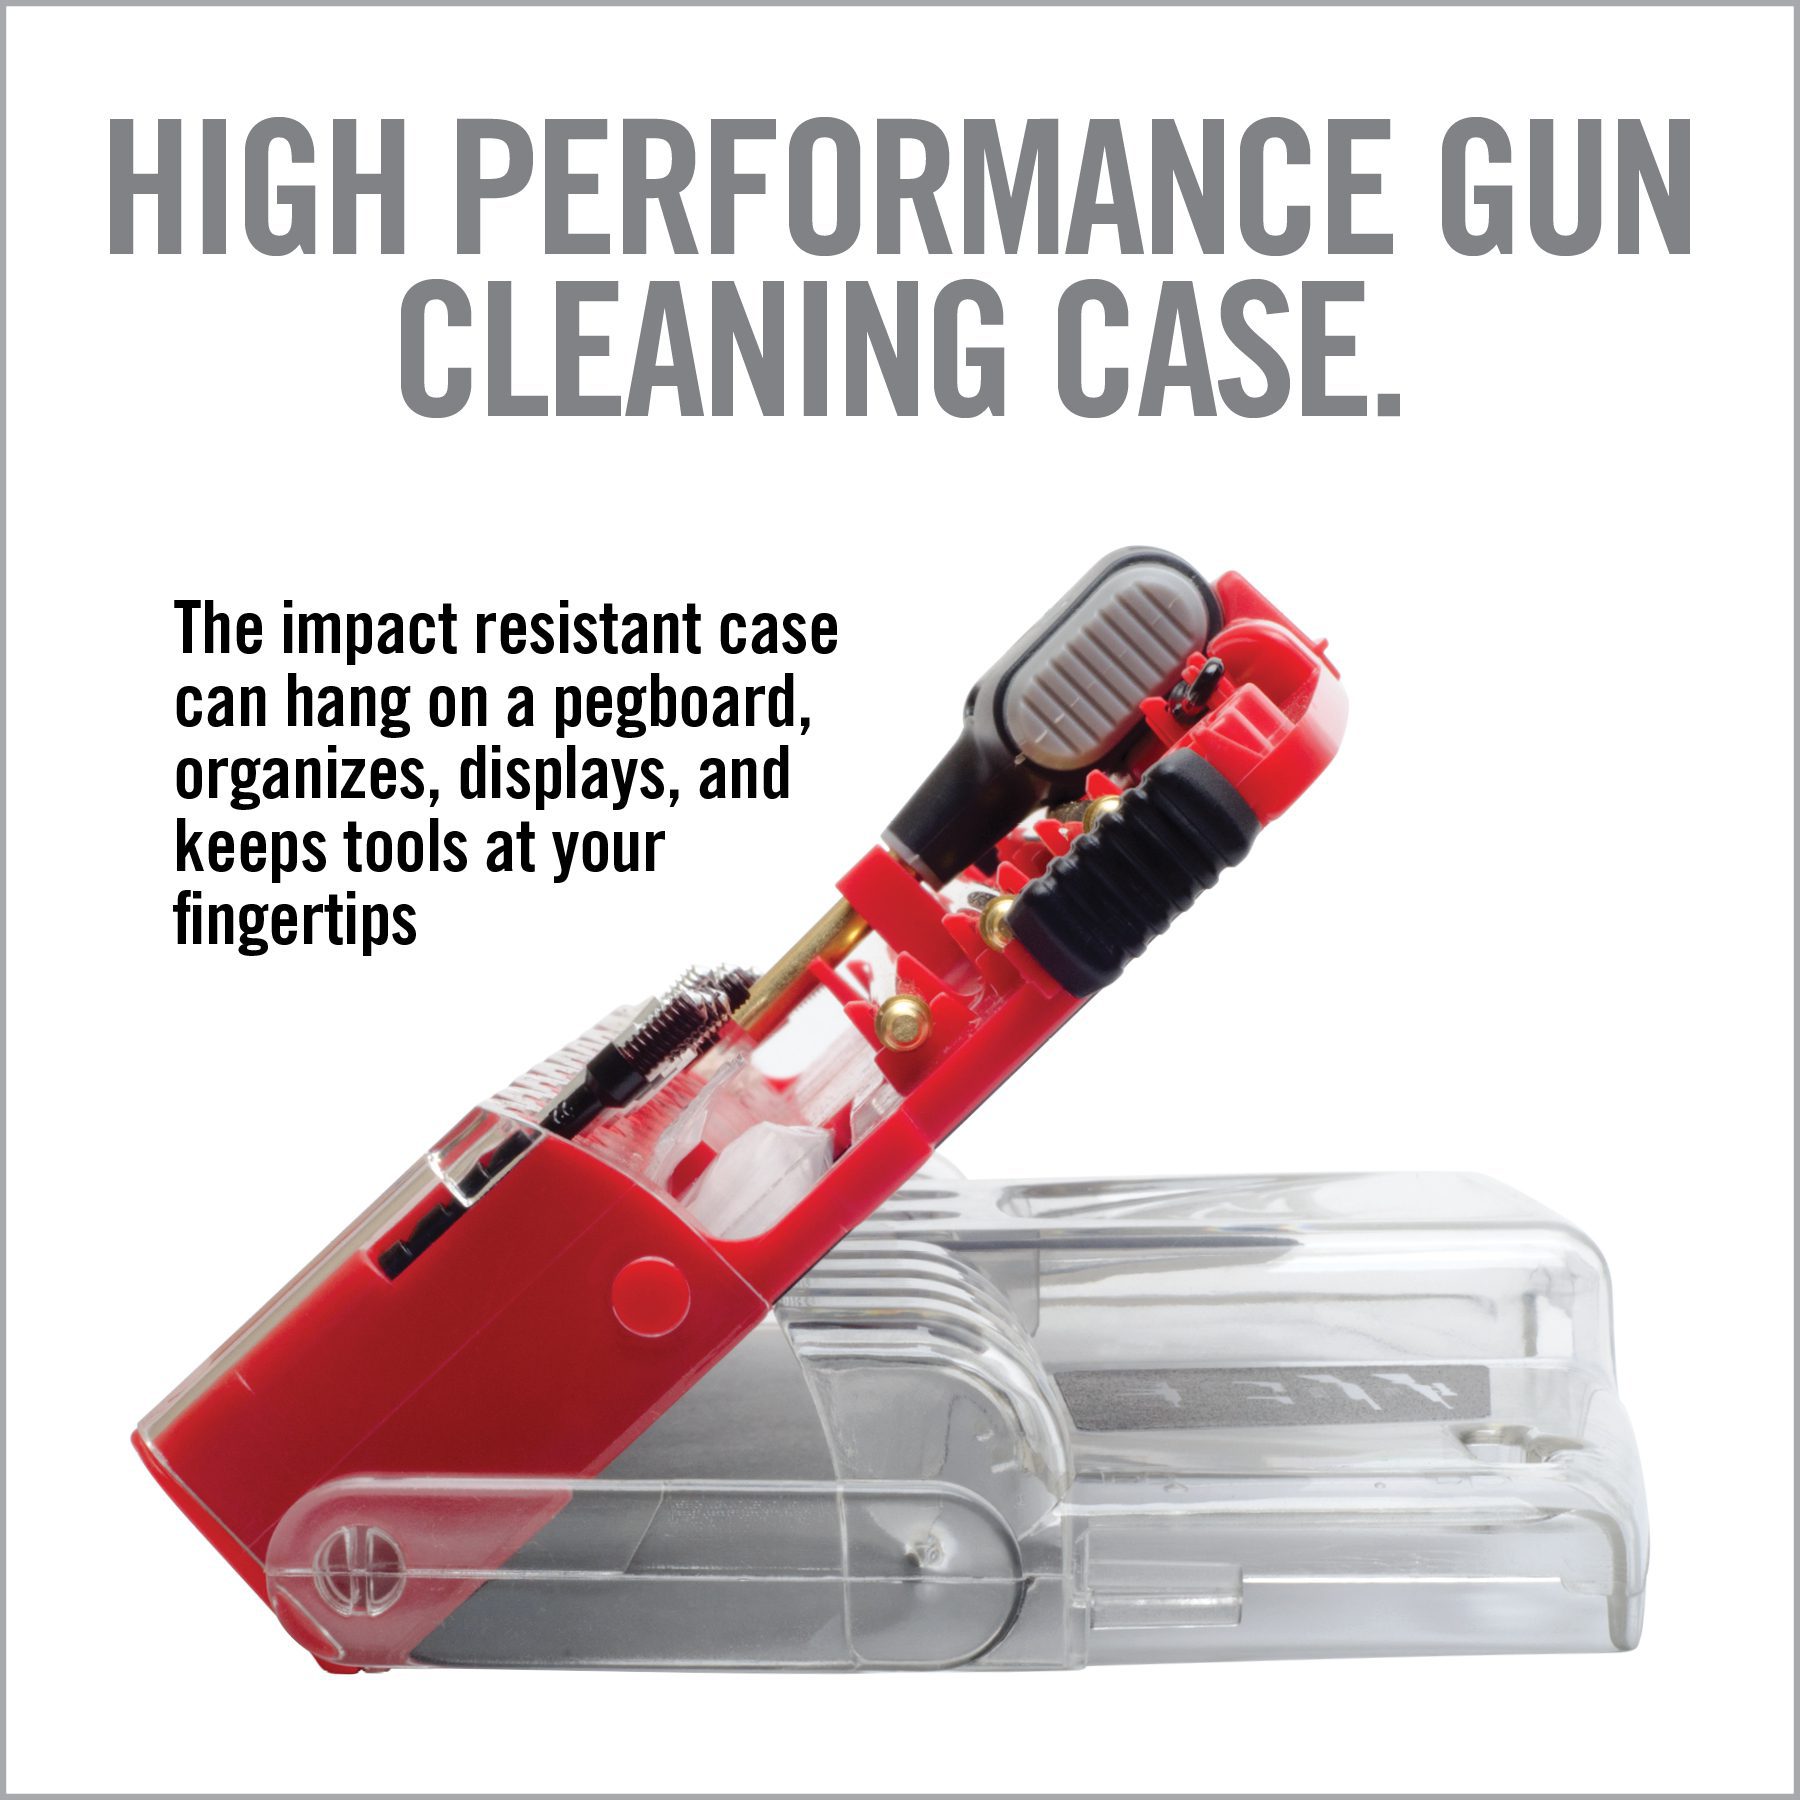 an advertisement for a high performance gun cleaning case